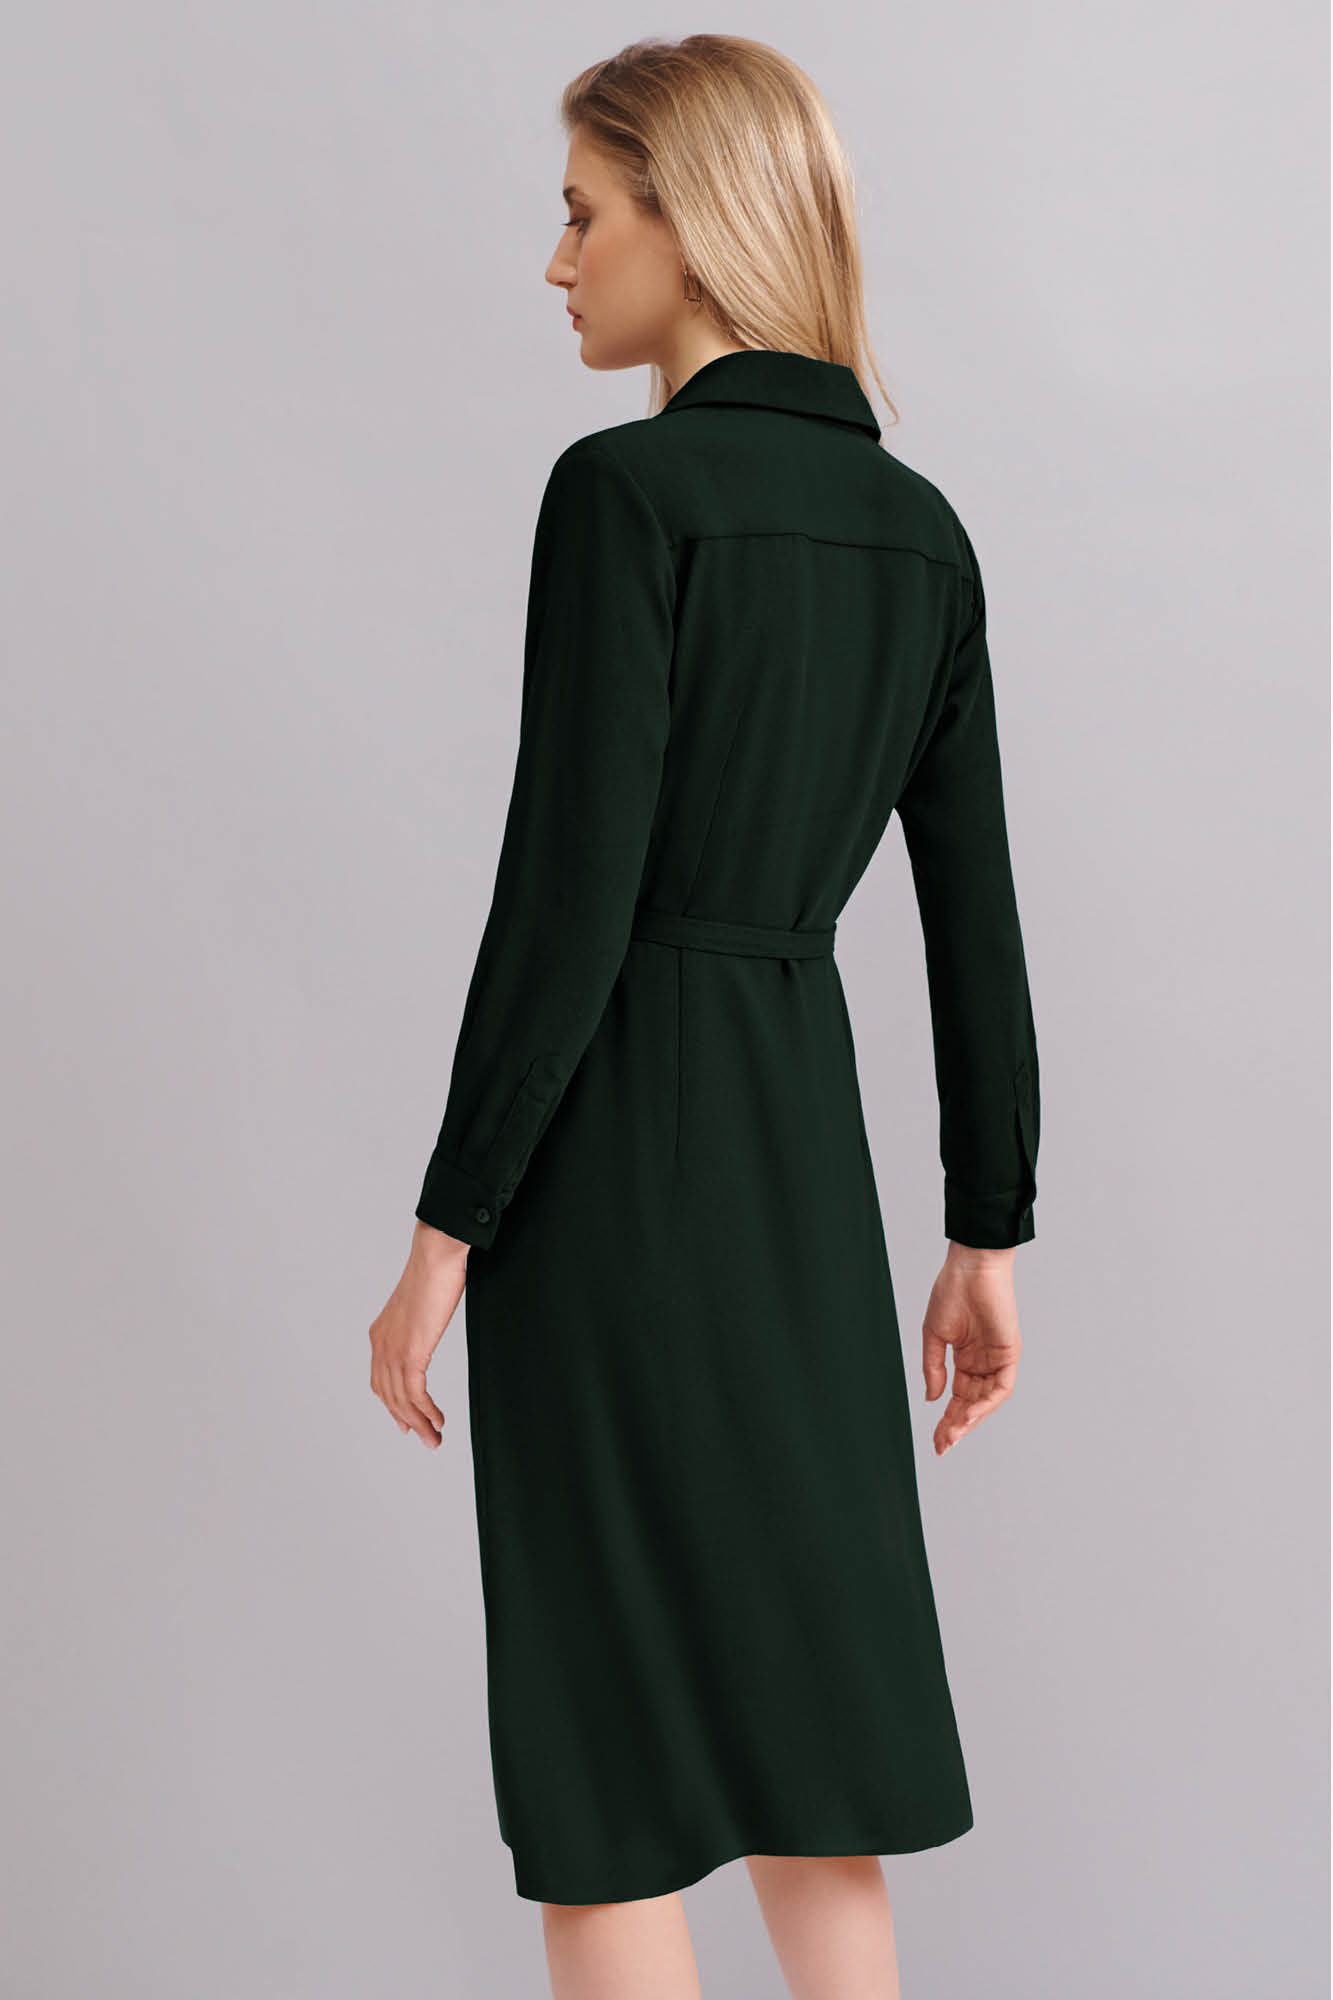 Arundel Green Dress